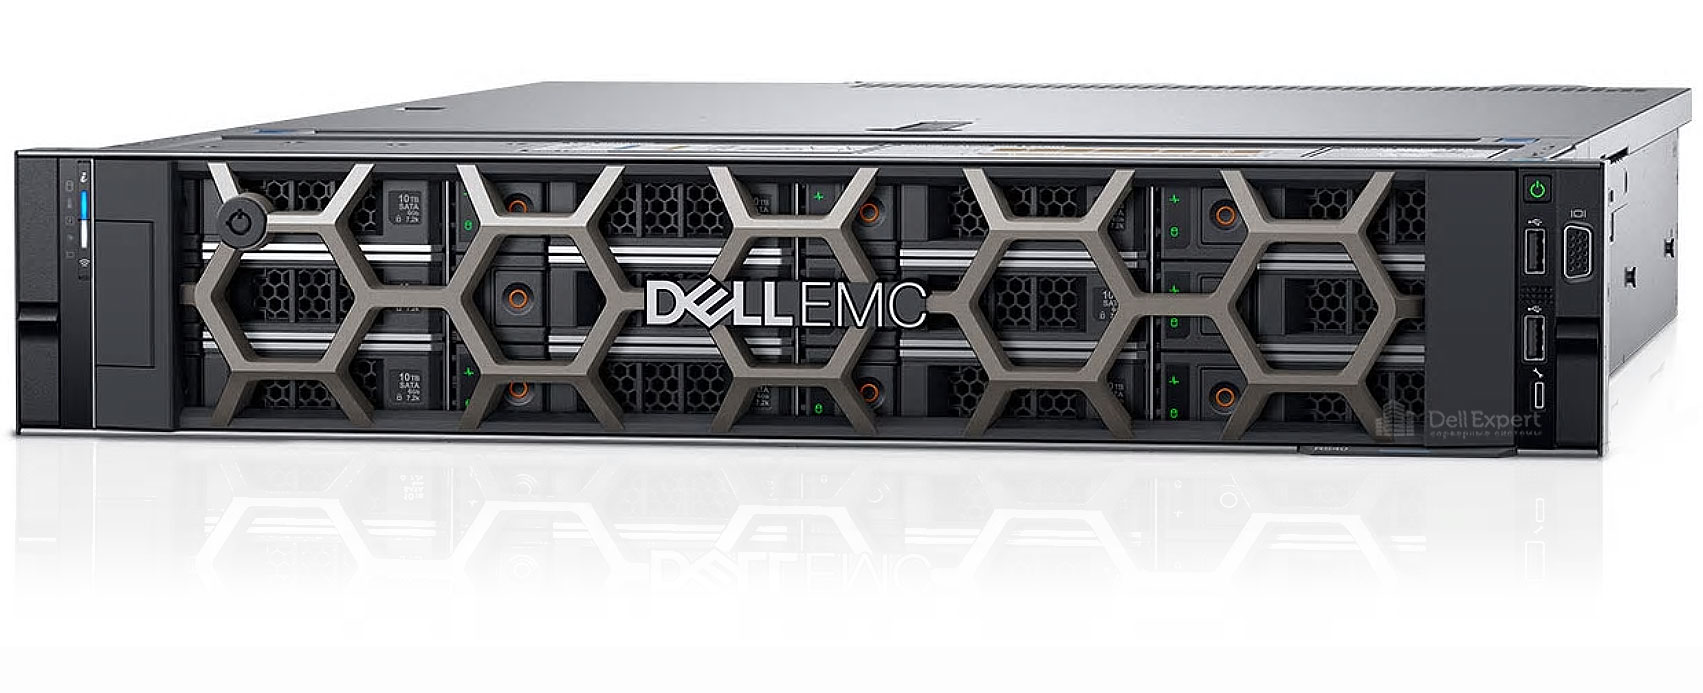 Dell R540 Сервер Dell EMC PowerEdge R540 2U Rack Servers серверы